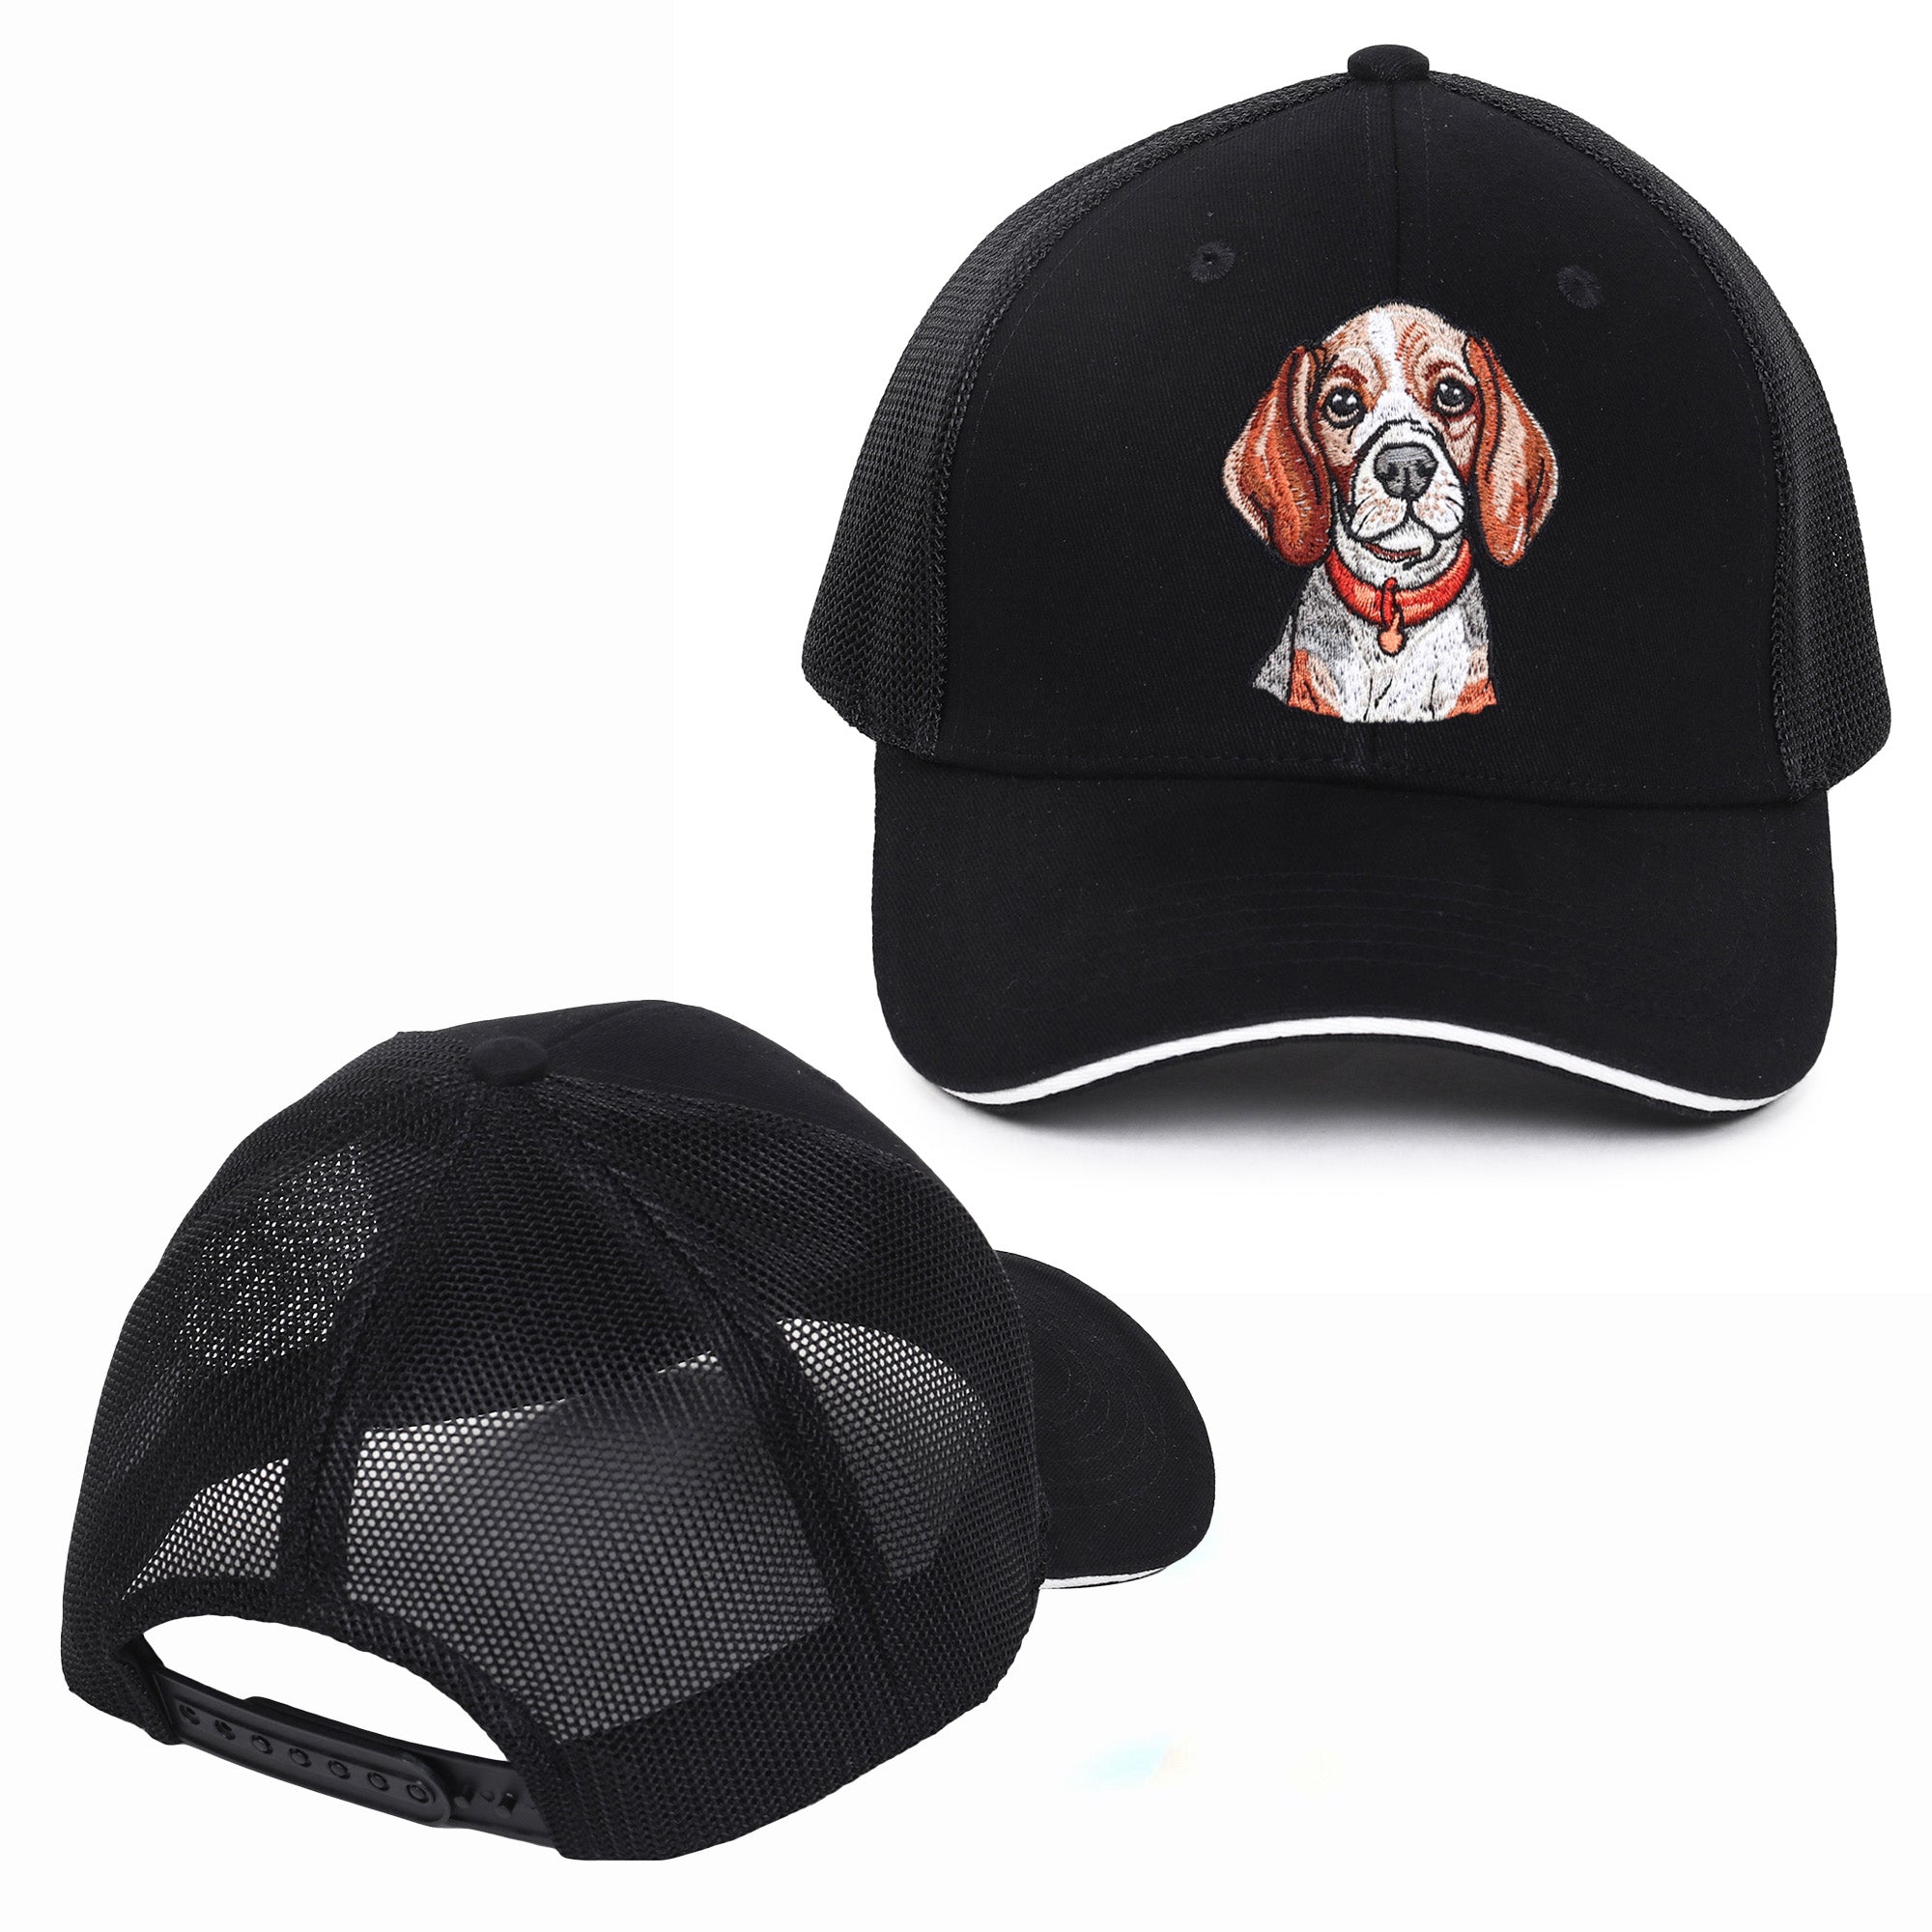 Hound Dog Embroidered Baseball Caps